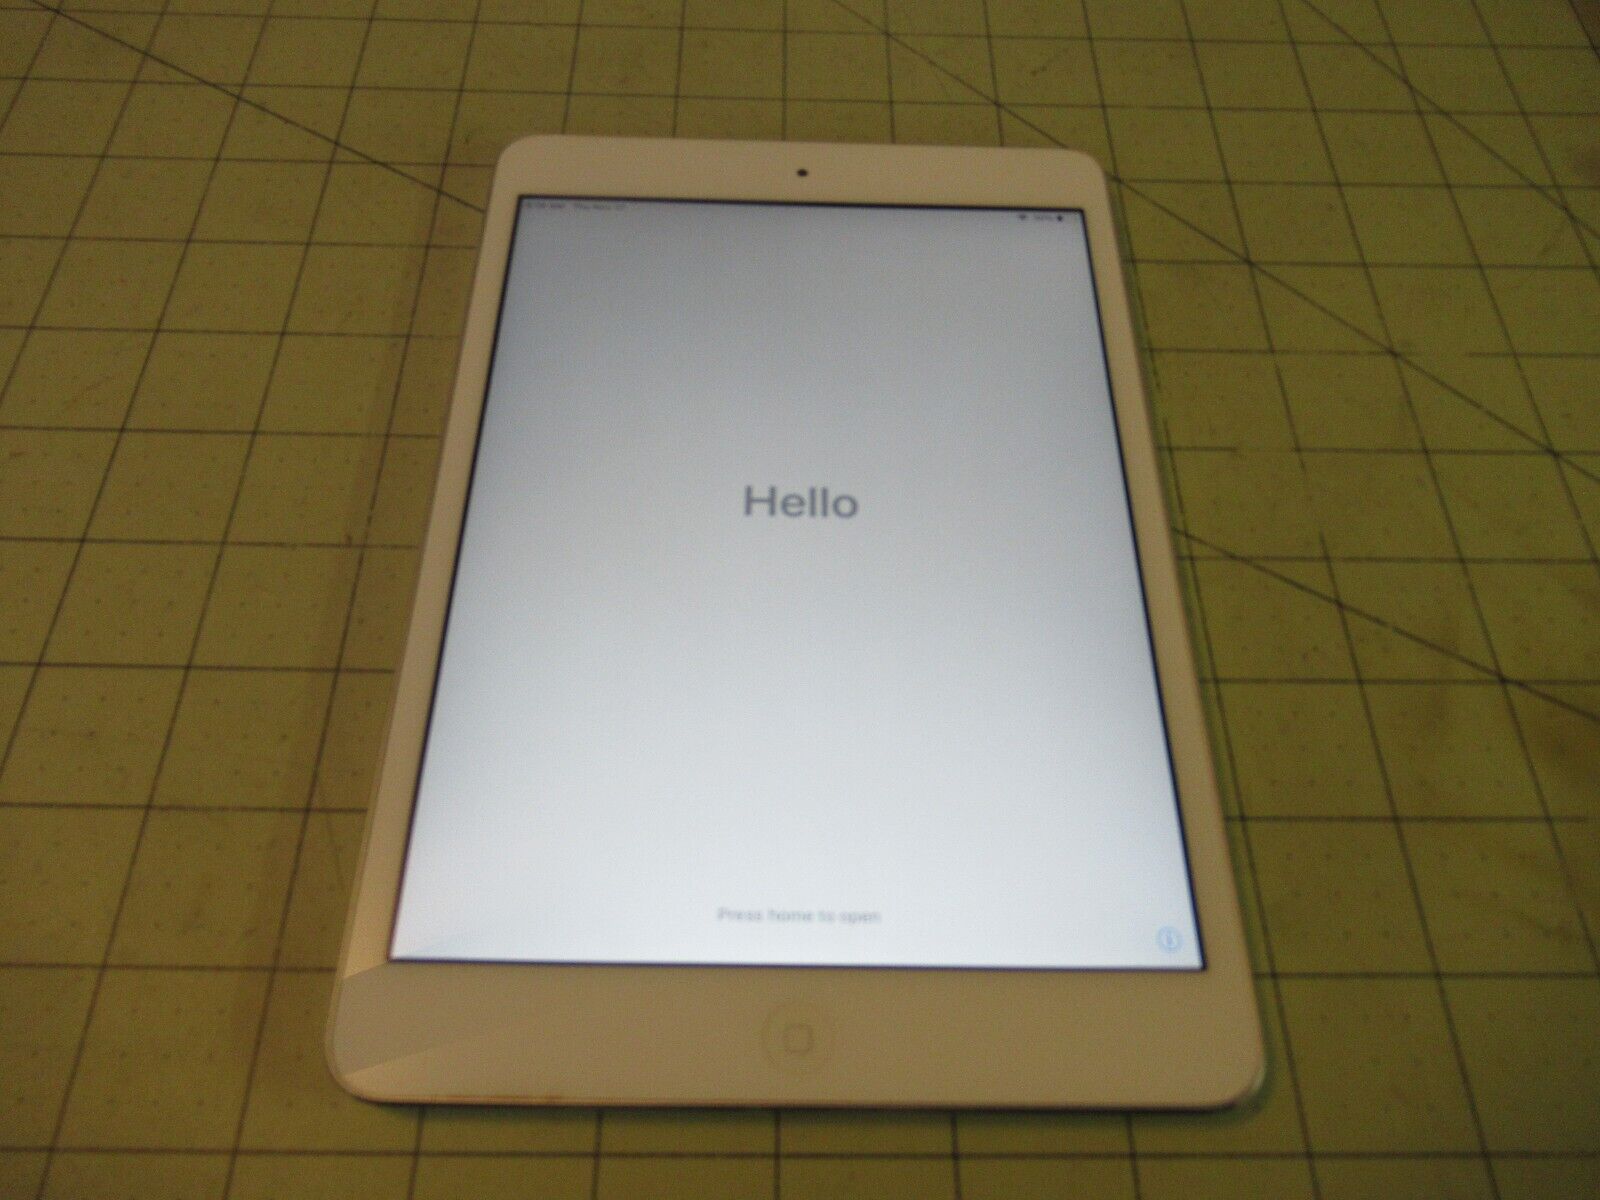 Apple iPad mini 2 32GB, Wi-Fi, 7.9in - Silver for sale online | eBay